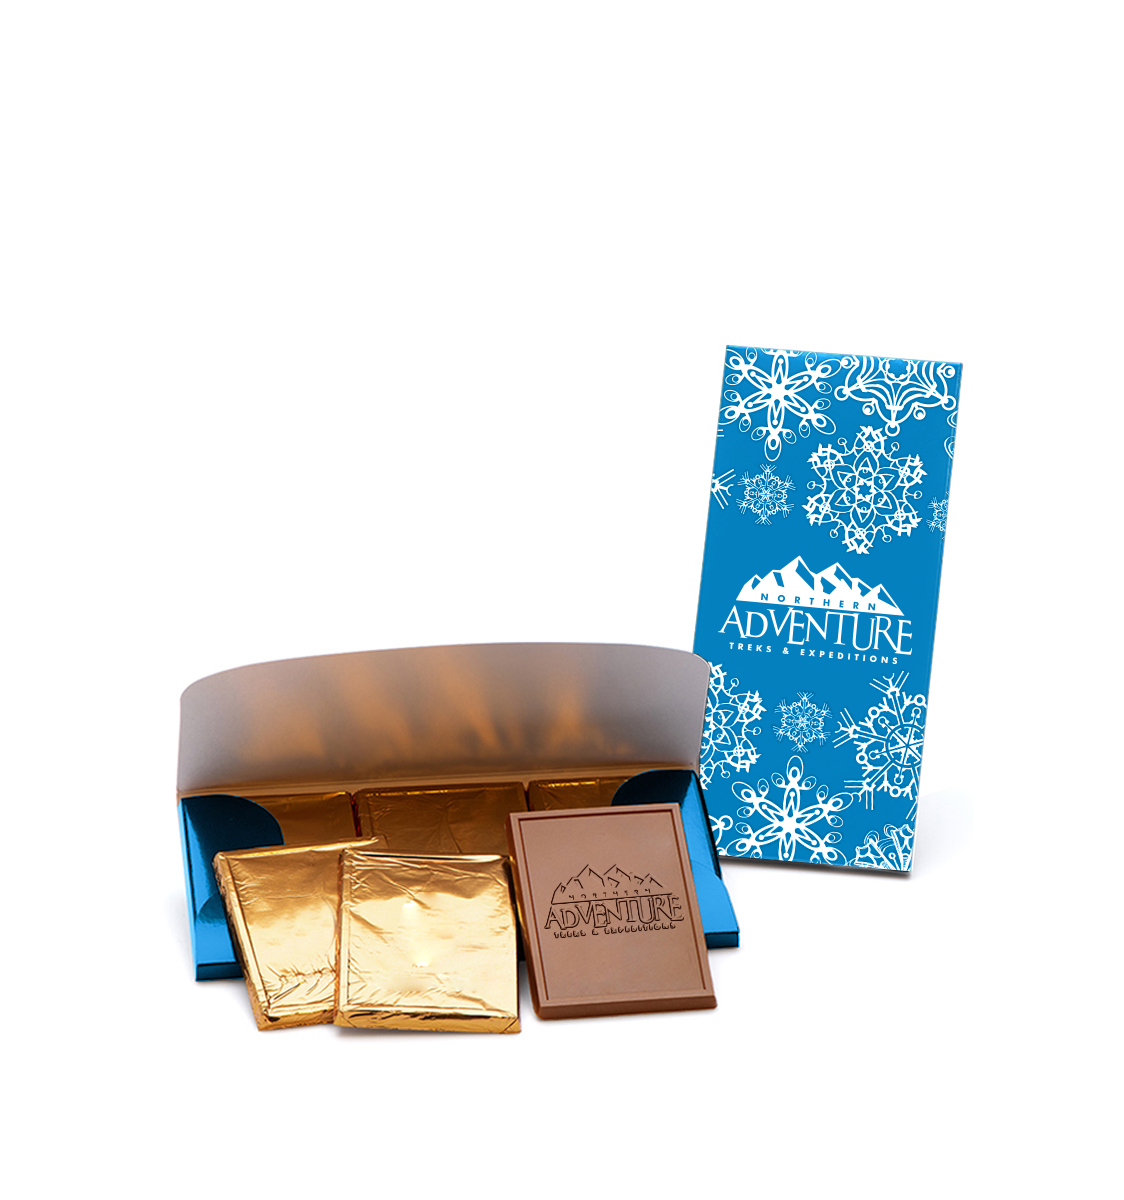 holiday-gift-fully-custom-chocolate-7325-printed-envelope-belgian-trio-menu